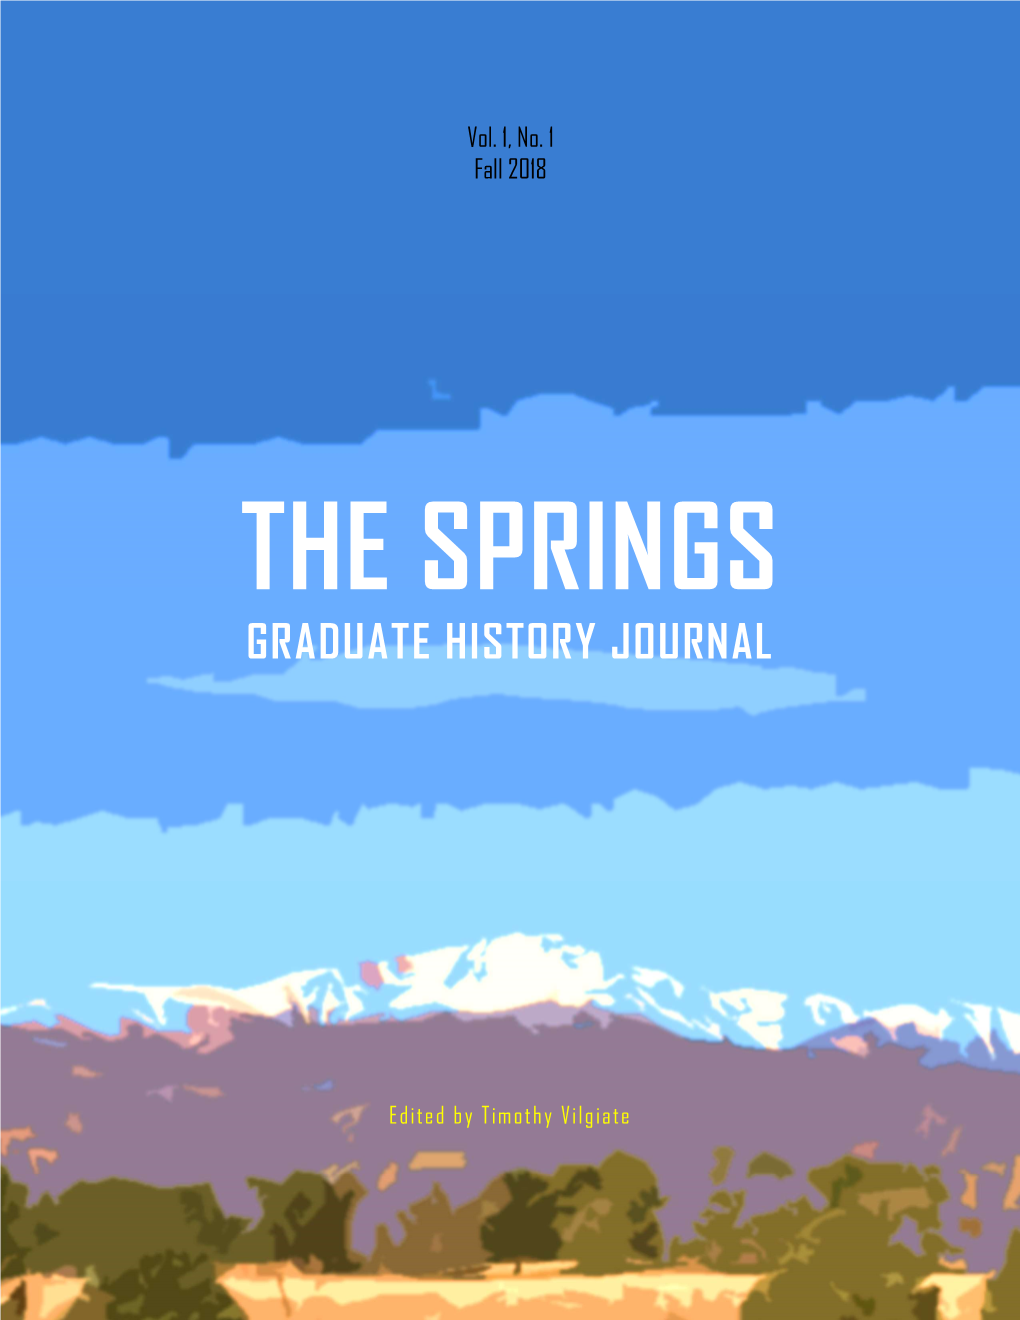 Graduate History Journal